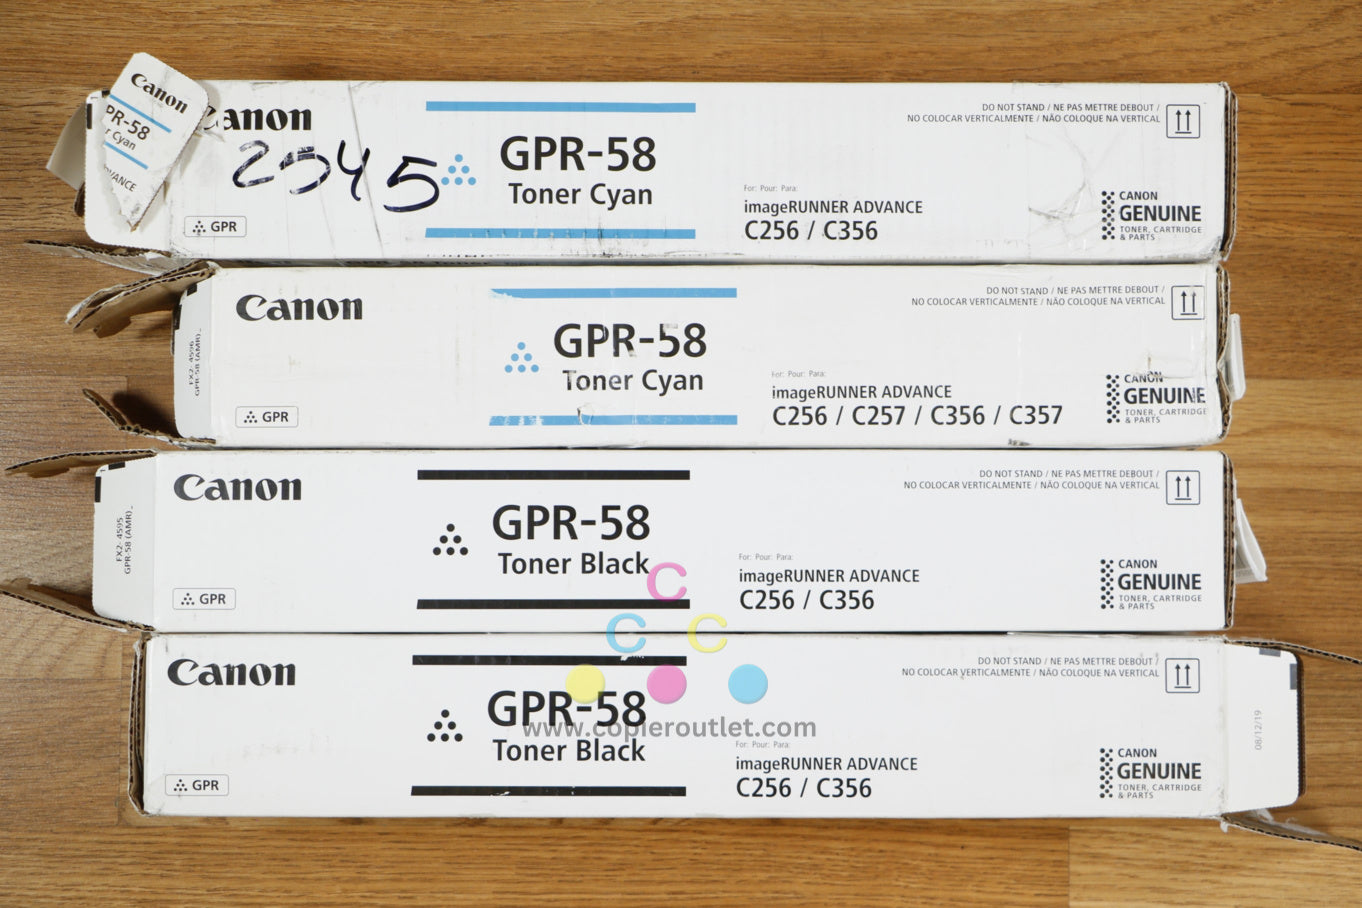 Open Canon GPR-58 CCKK Toner Cartridges imageRUNNER ADVANCE C256/C257/C356/C357!